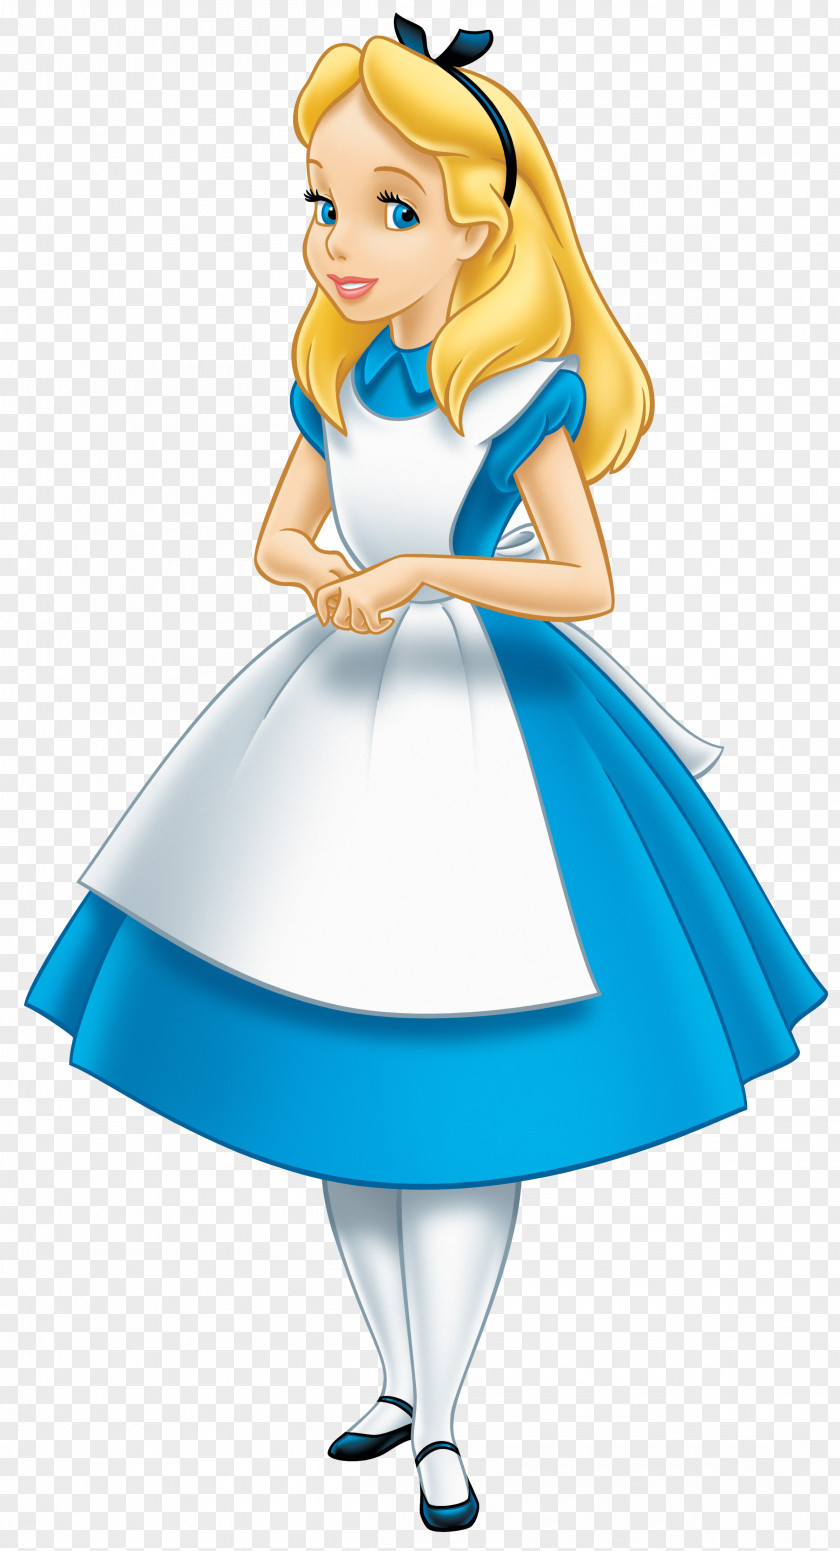 Transparent Alice Clipart Alice's Adventures In Wonderland Queen Of Hearts White Rabbit PNG